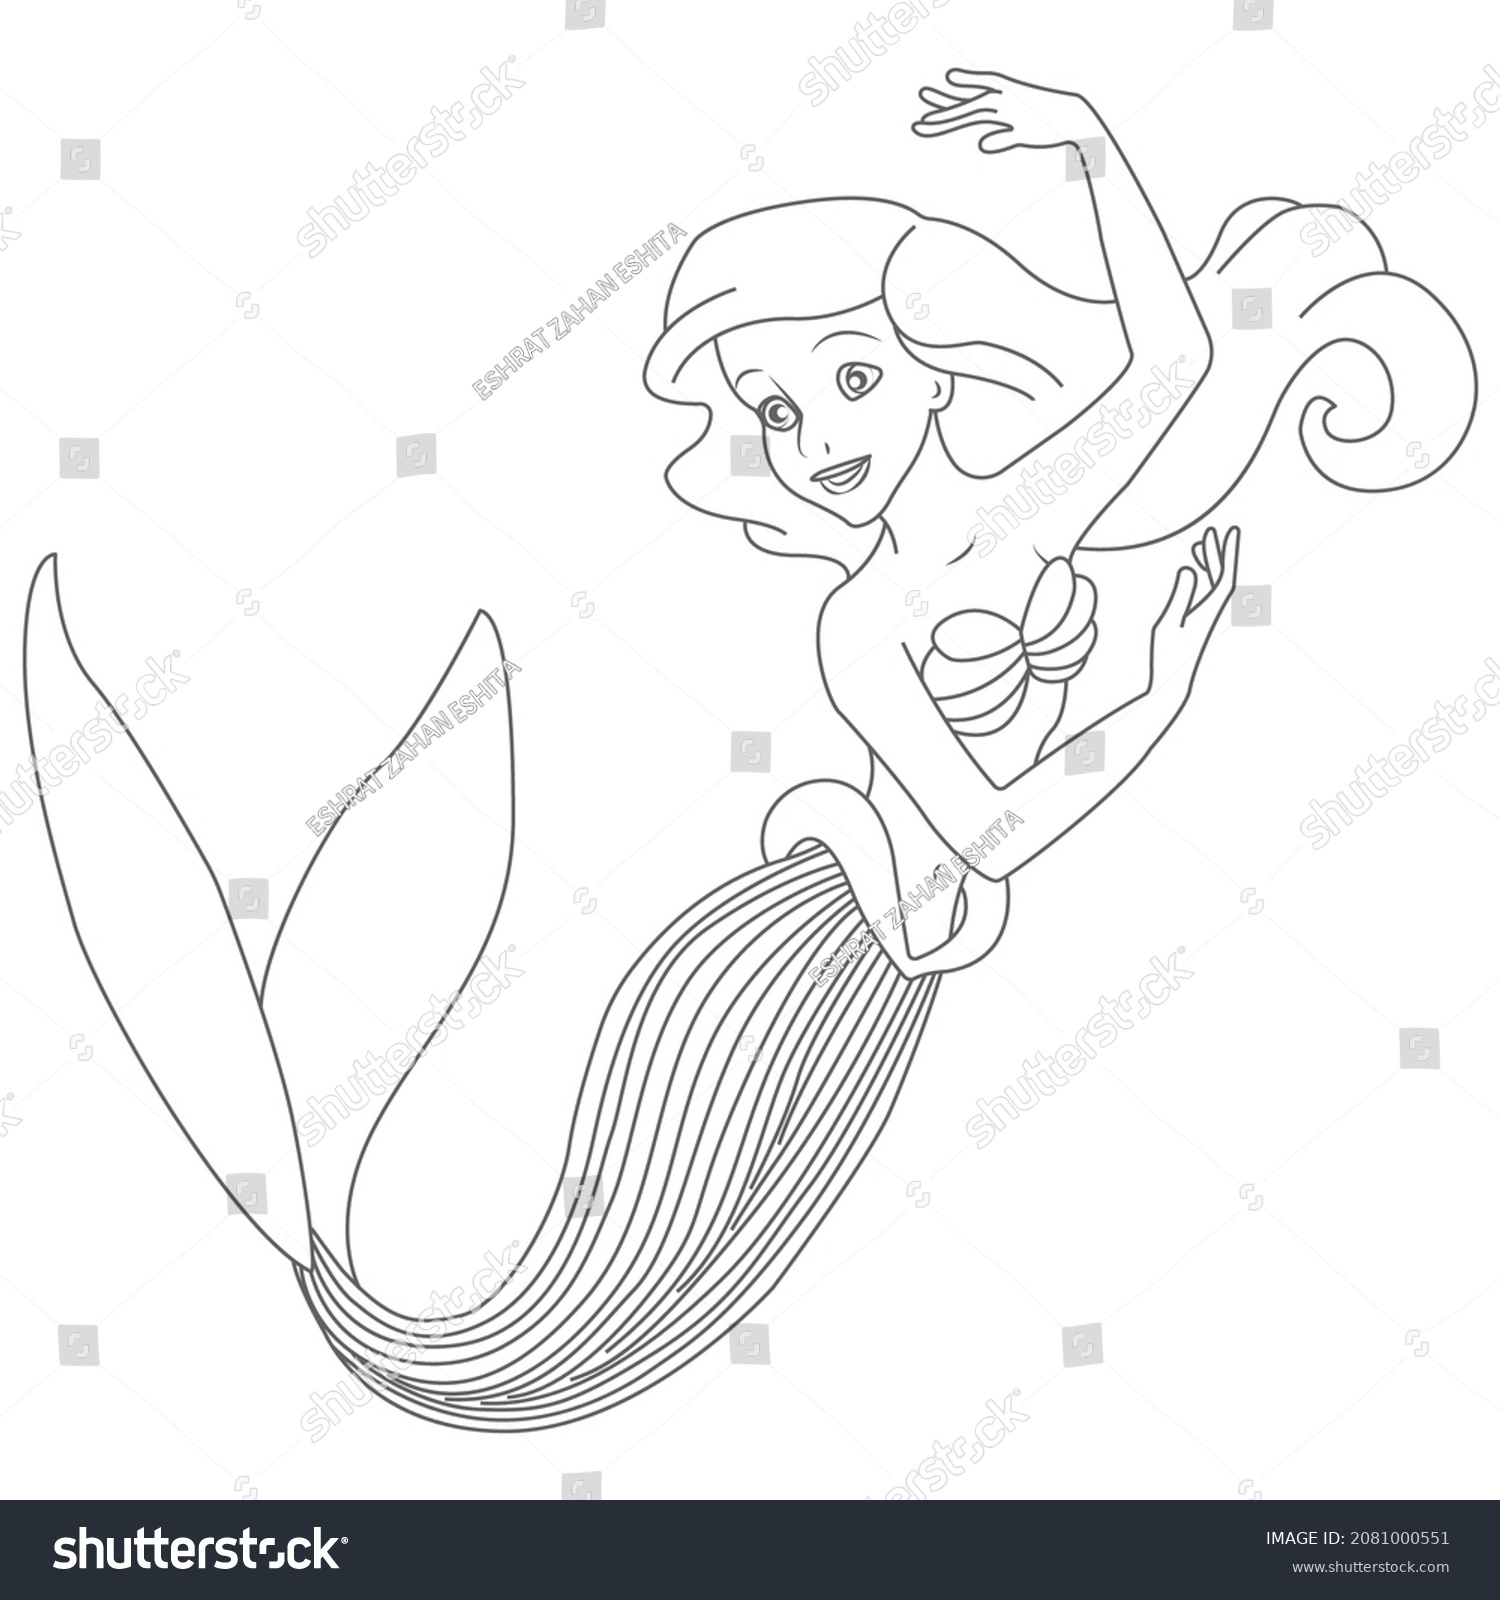 Beautiful Cute Mermaid Coloring Page Kids Stock Vector (Royalty Free ...